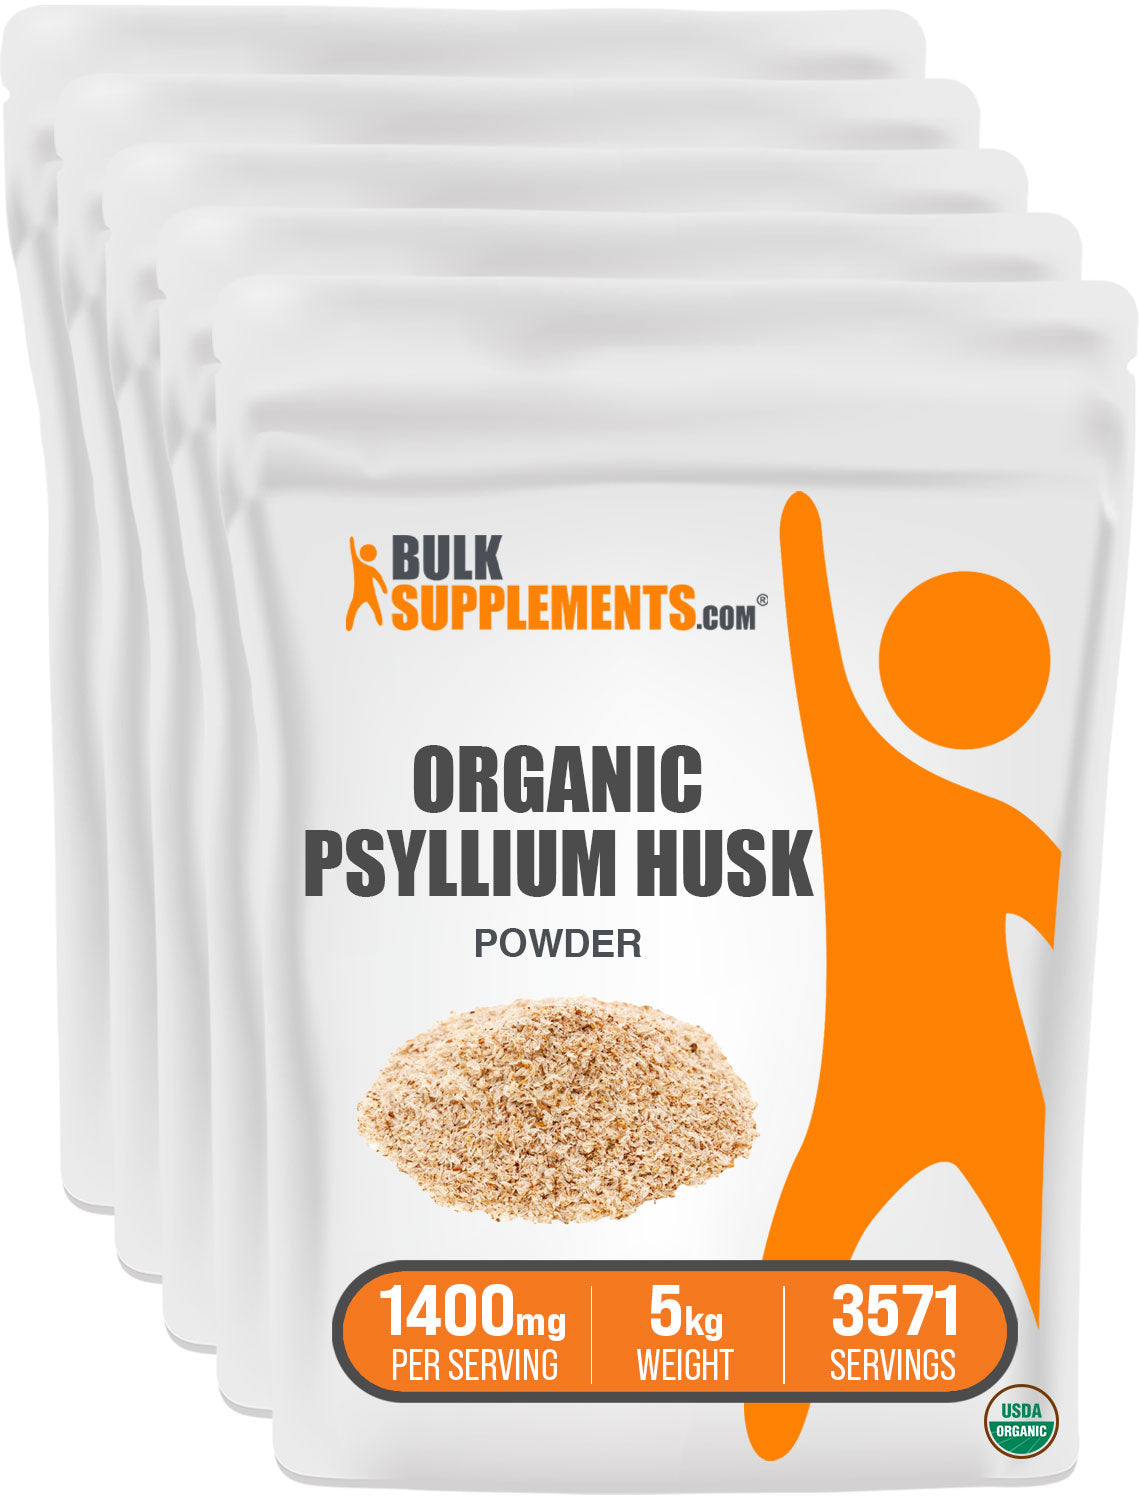 BulkSupplements.com Organic Psyllium Husk Powder 5KG Bag